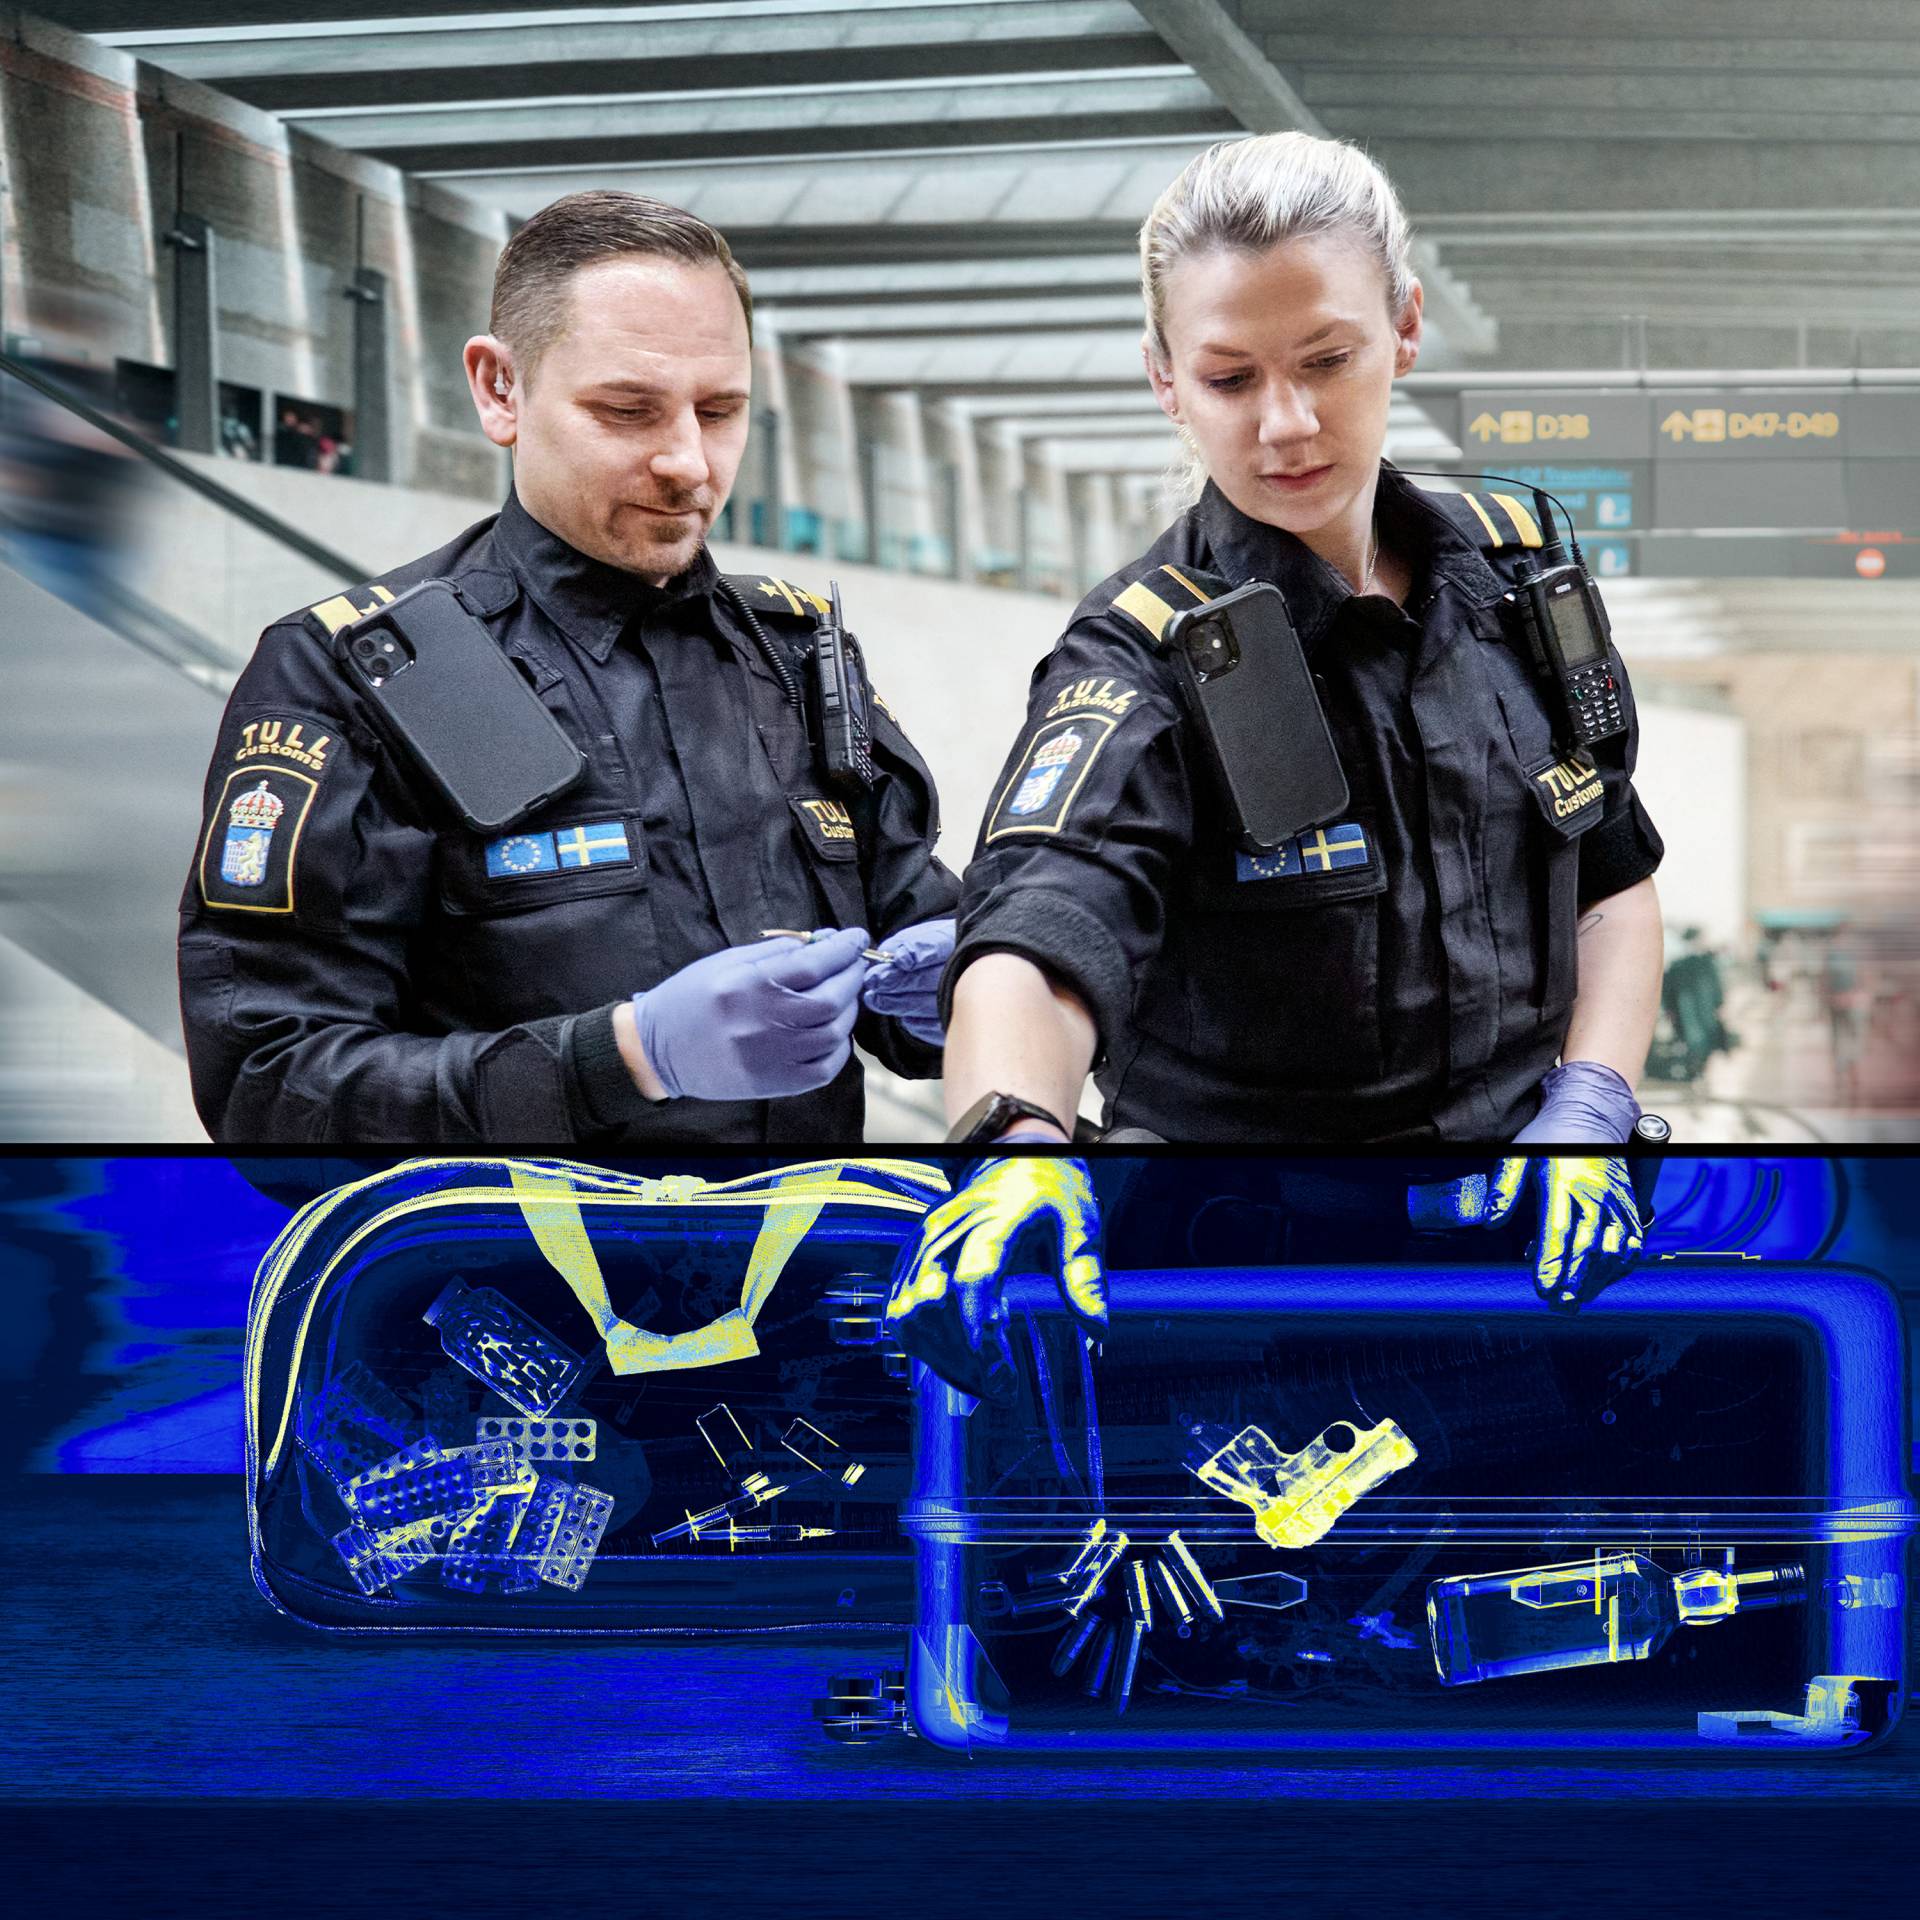 |NL| Border Control Sweden (Gränsbevakarna Sverige)